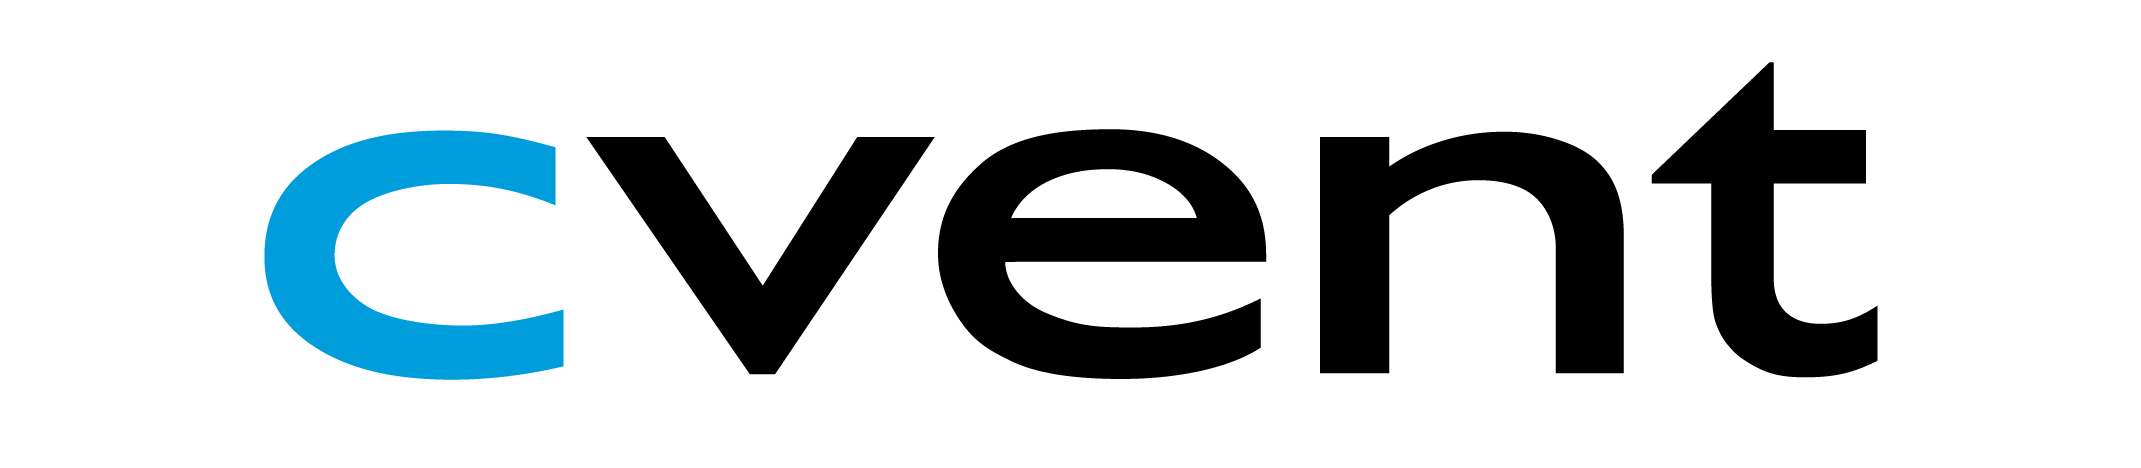 cvent-logo-HI-Res_0 (cropped)